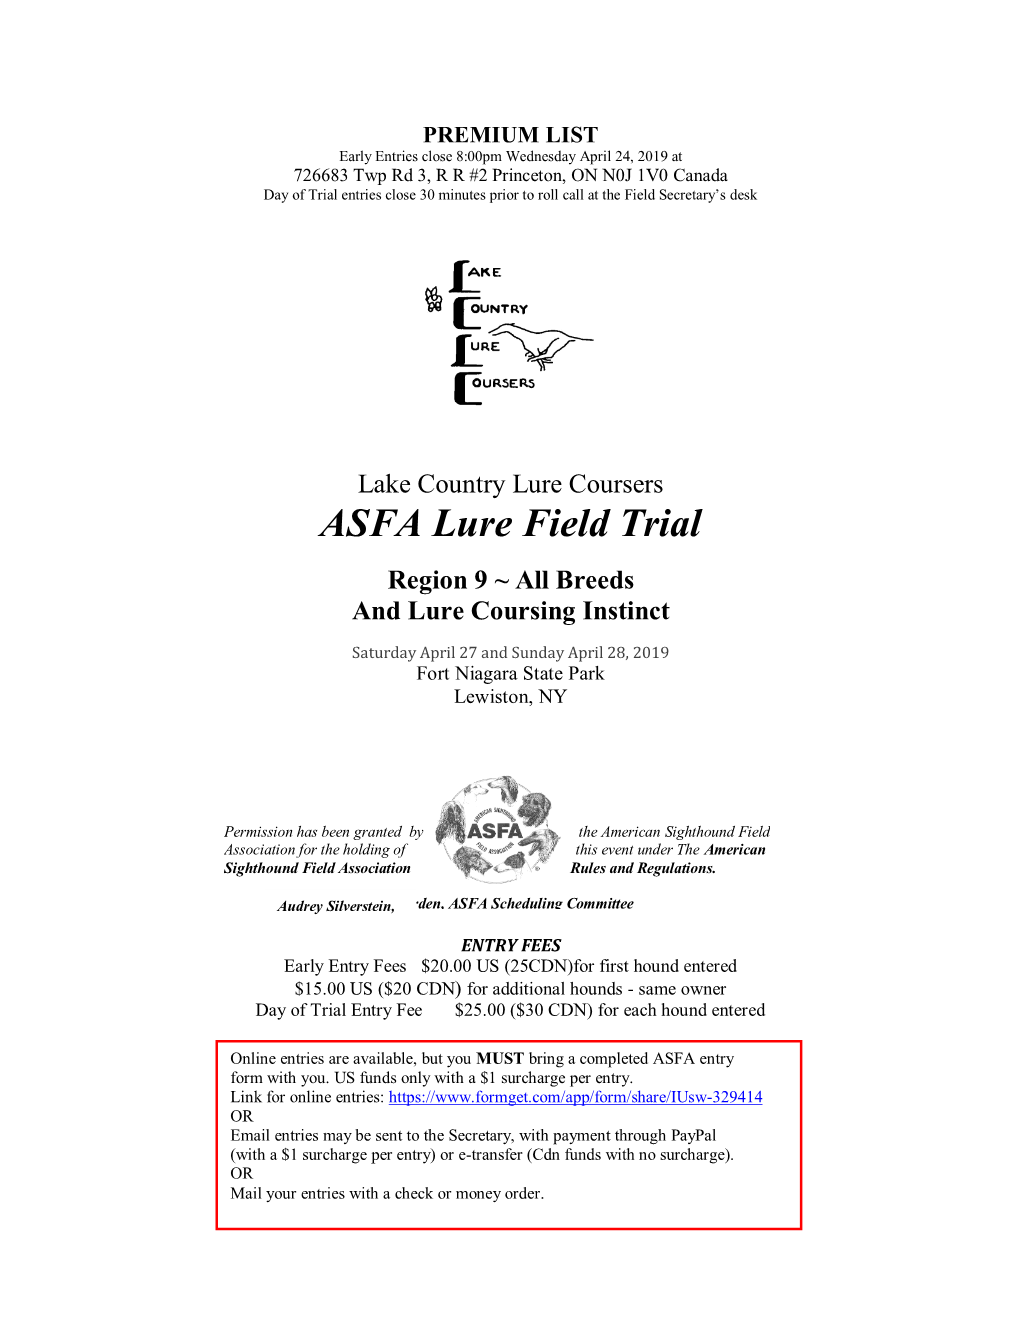 ASFA Lure Field Trial